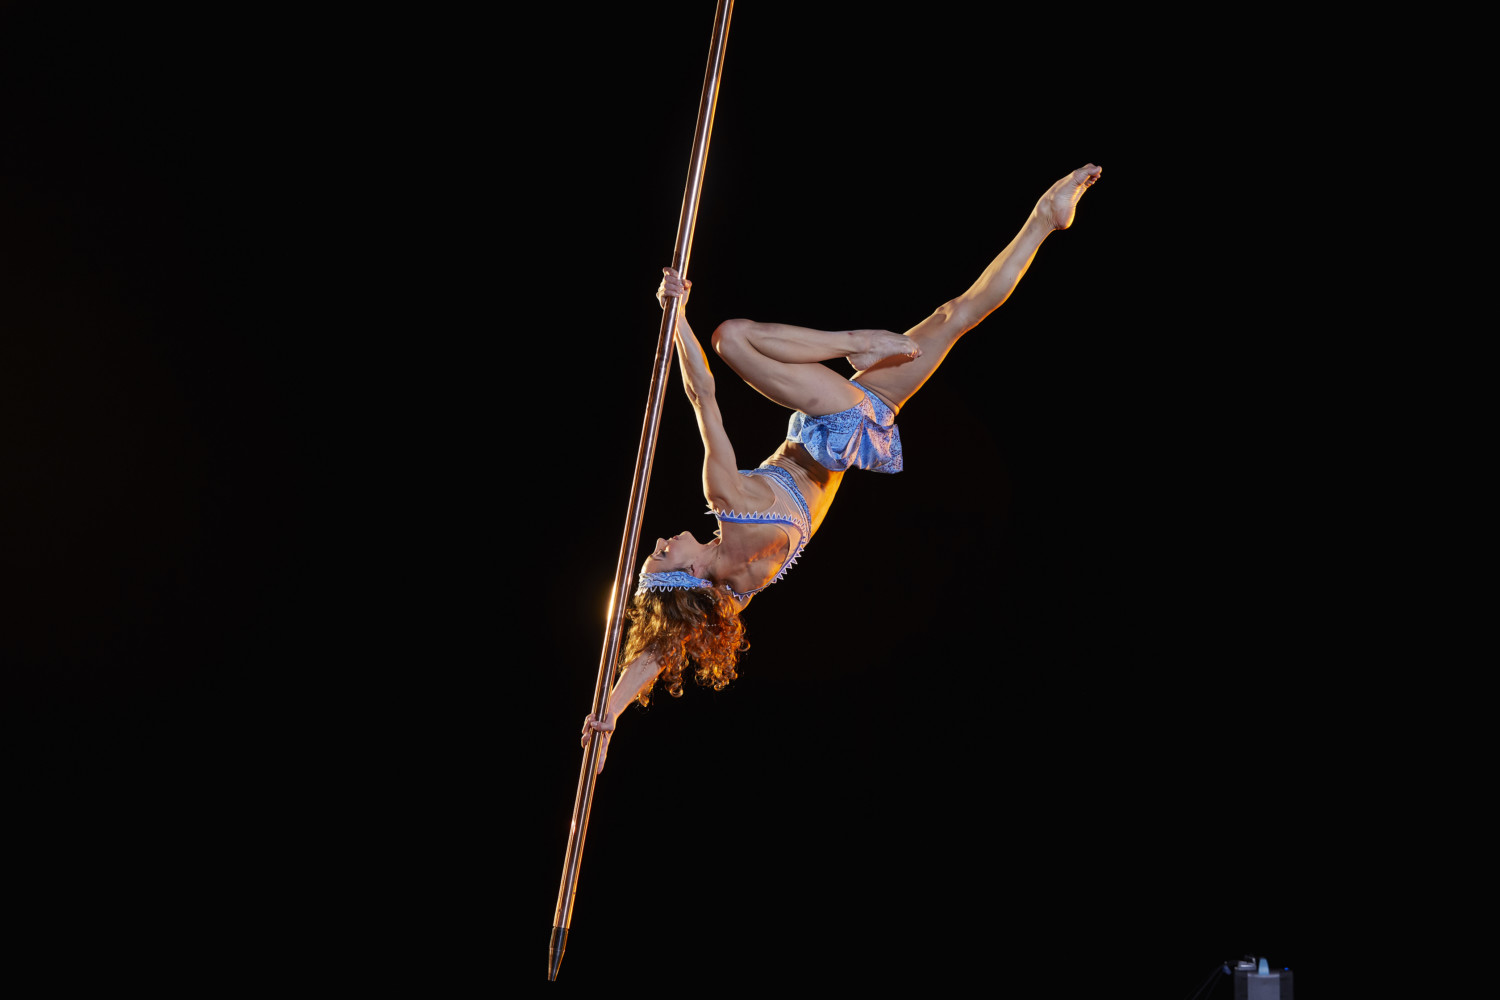 Cirque Du Soleil Corteo – A French Funeral In Portland